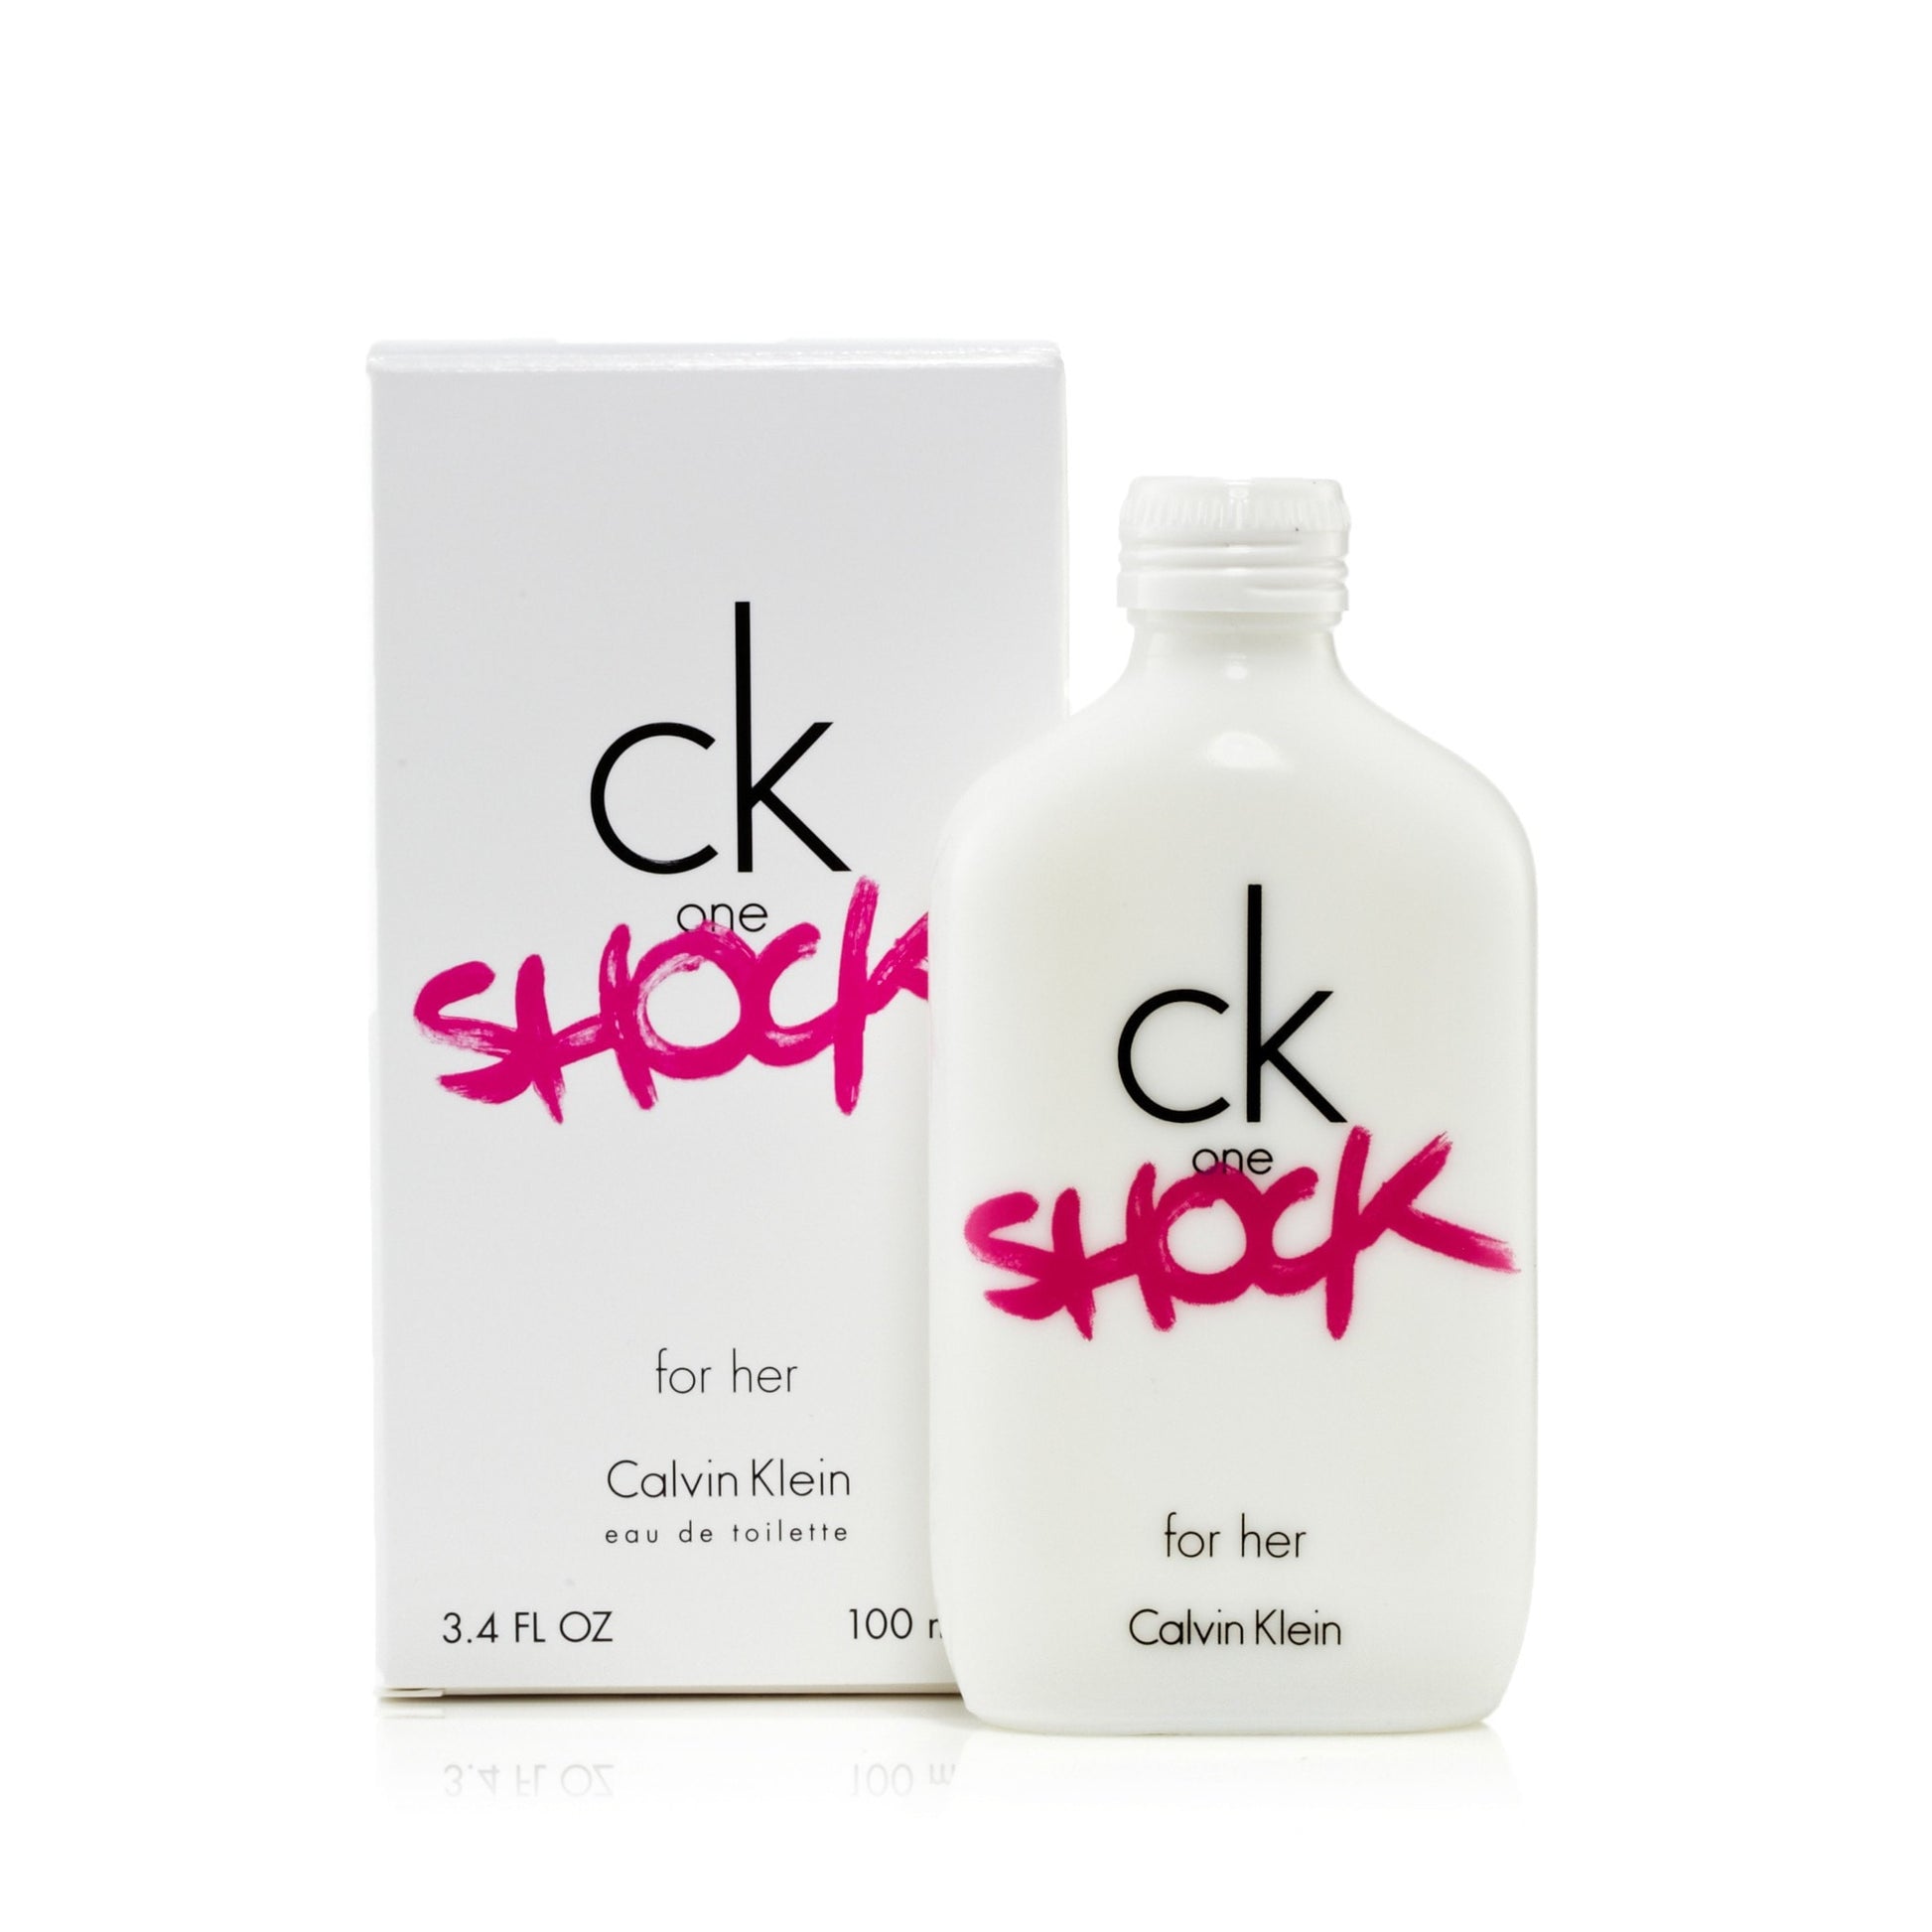 CK One Shock Eau de Toilette Spray for Women by Calvin Klein 3.4 oz. Click to open in modal